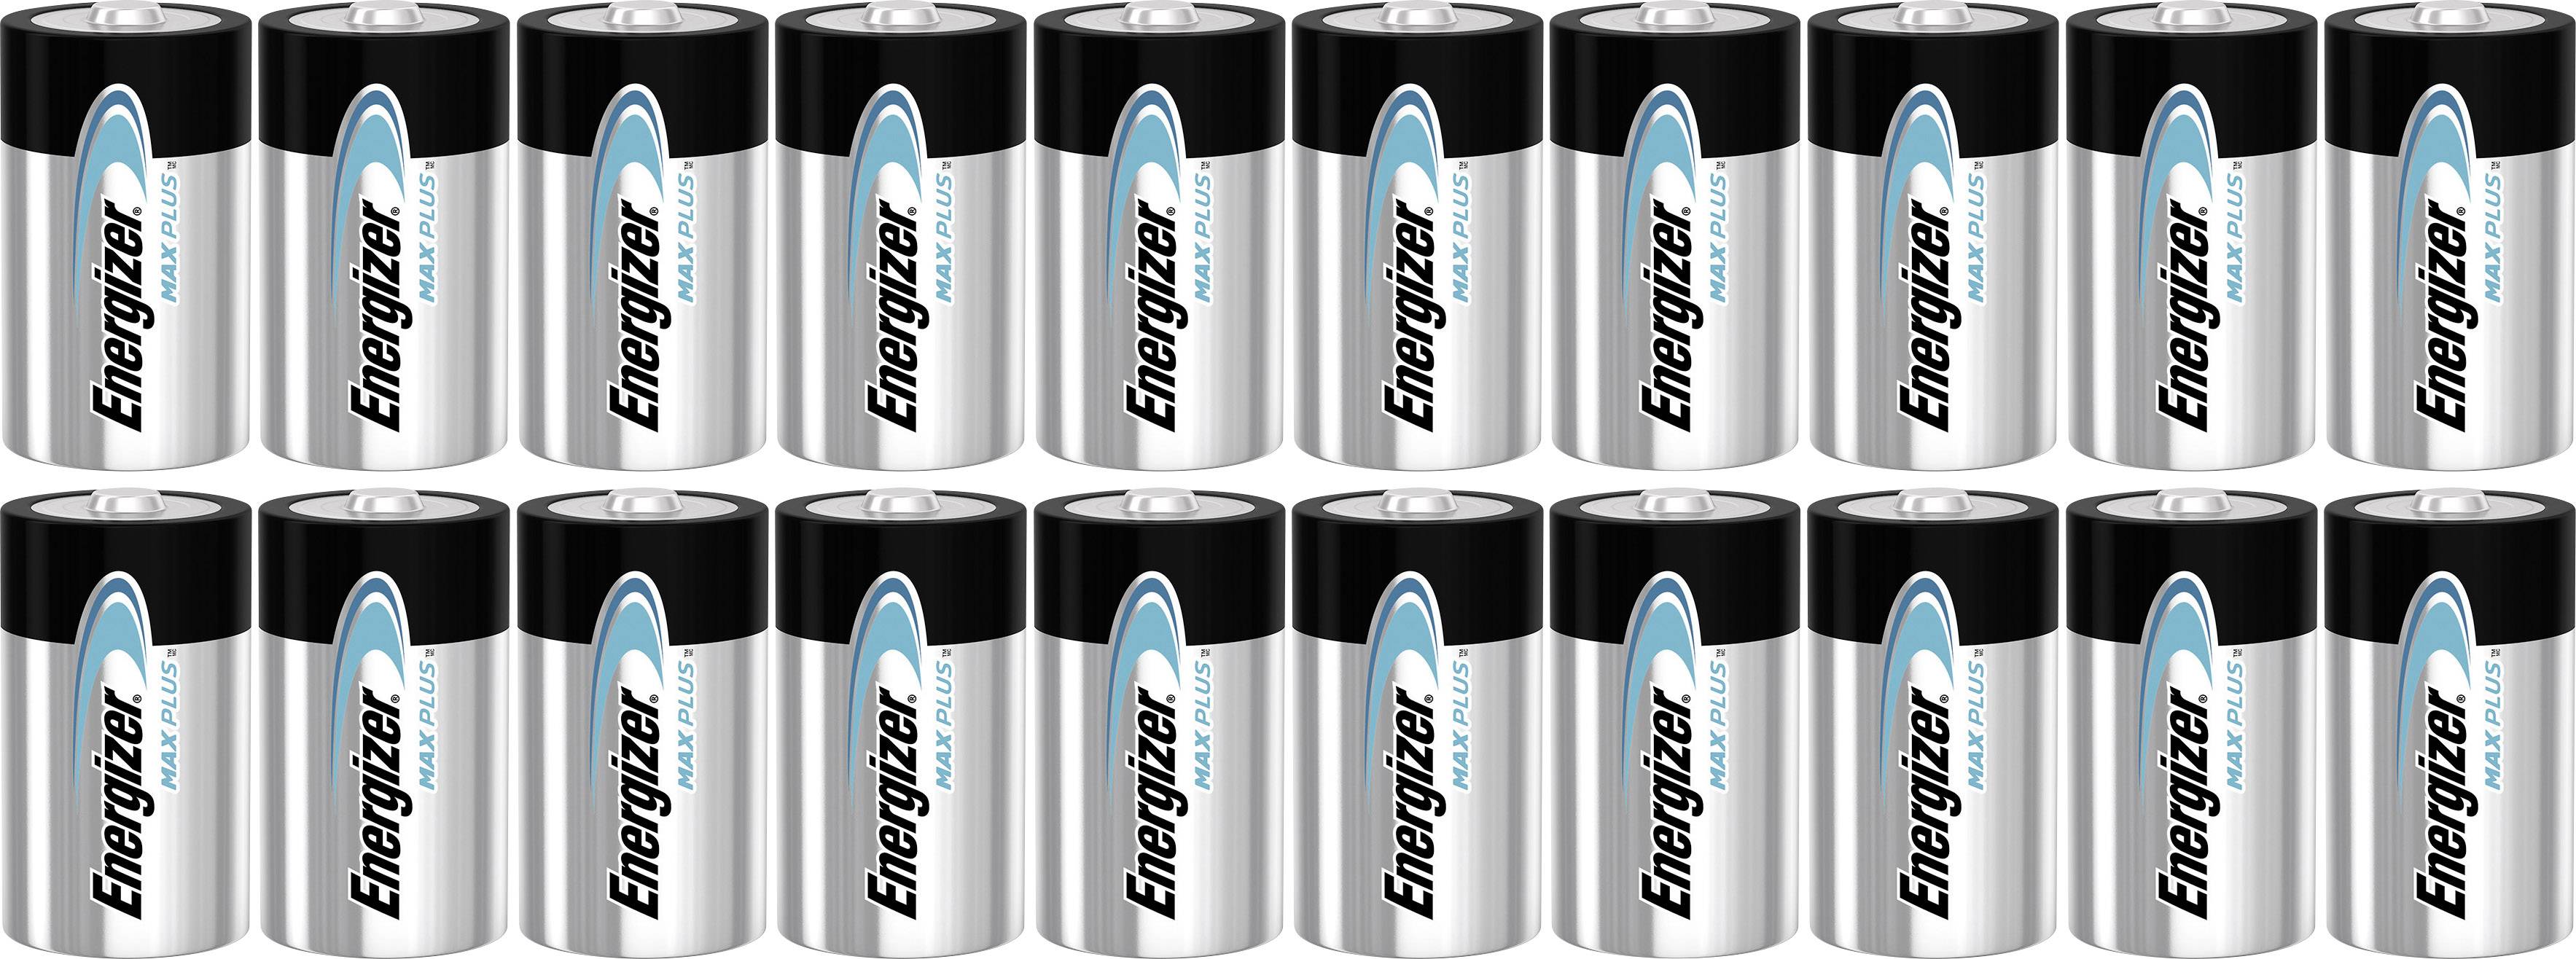 ENERGIZER Mono (D)-Batterie Alkali-Mangan Max Plus Industrial 1.5 V 20 Stück (E301323700)